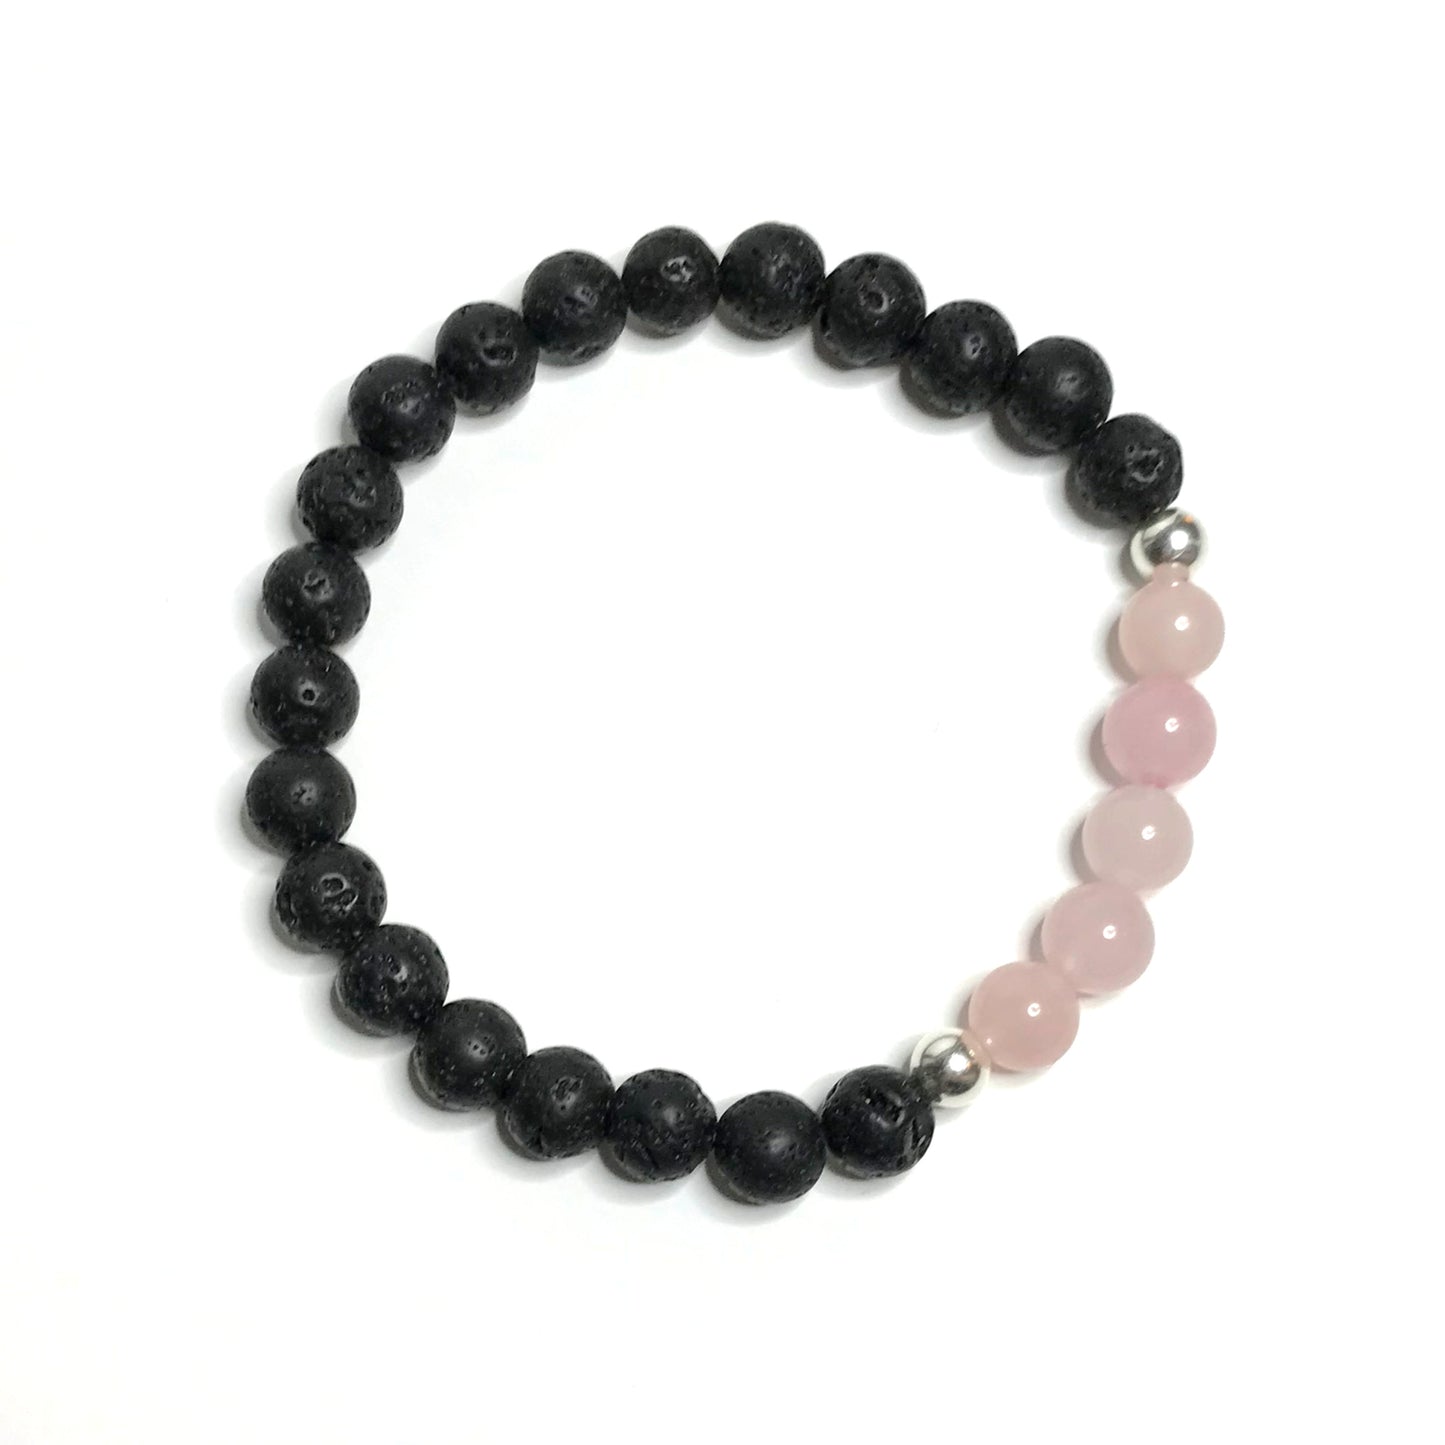 Rose quartz bracelet with lava rock beads